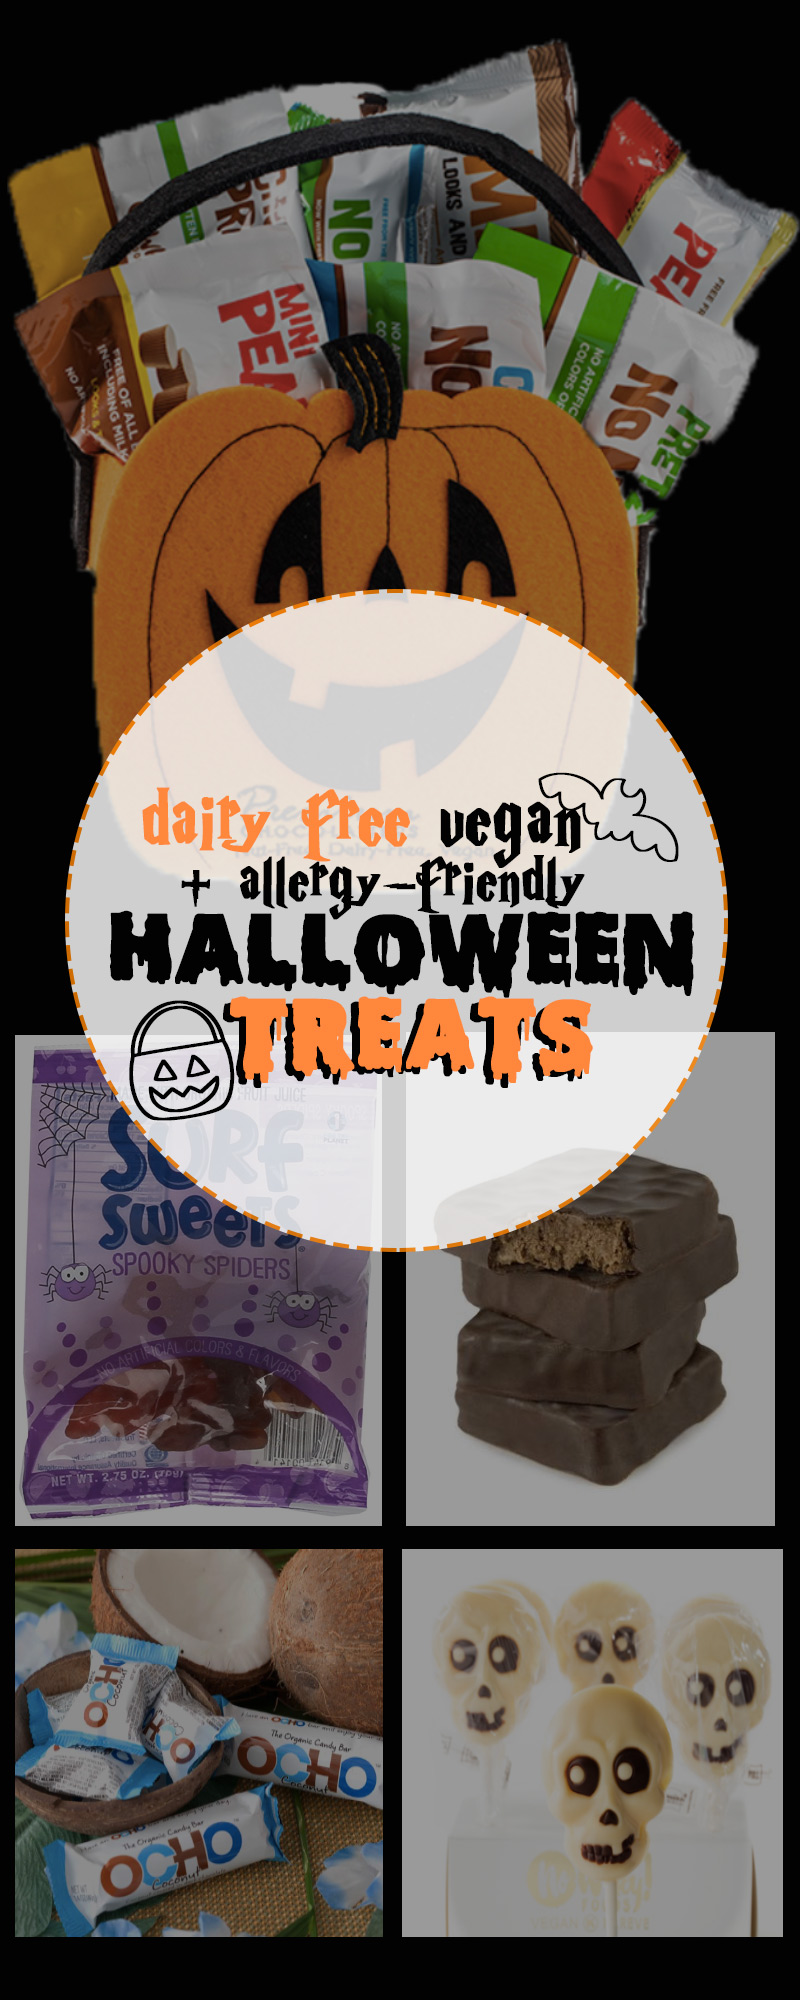 The Cutest + Tastiest Dairy-Free and Vegan Halloween Treats